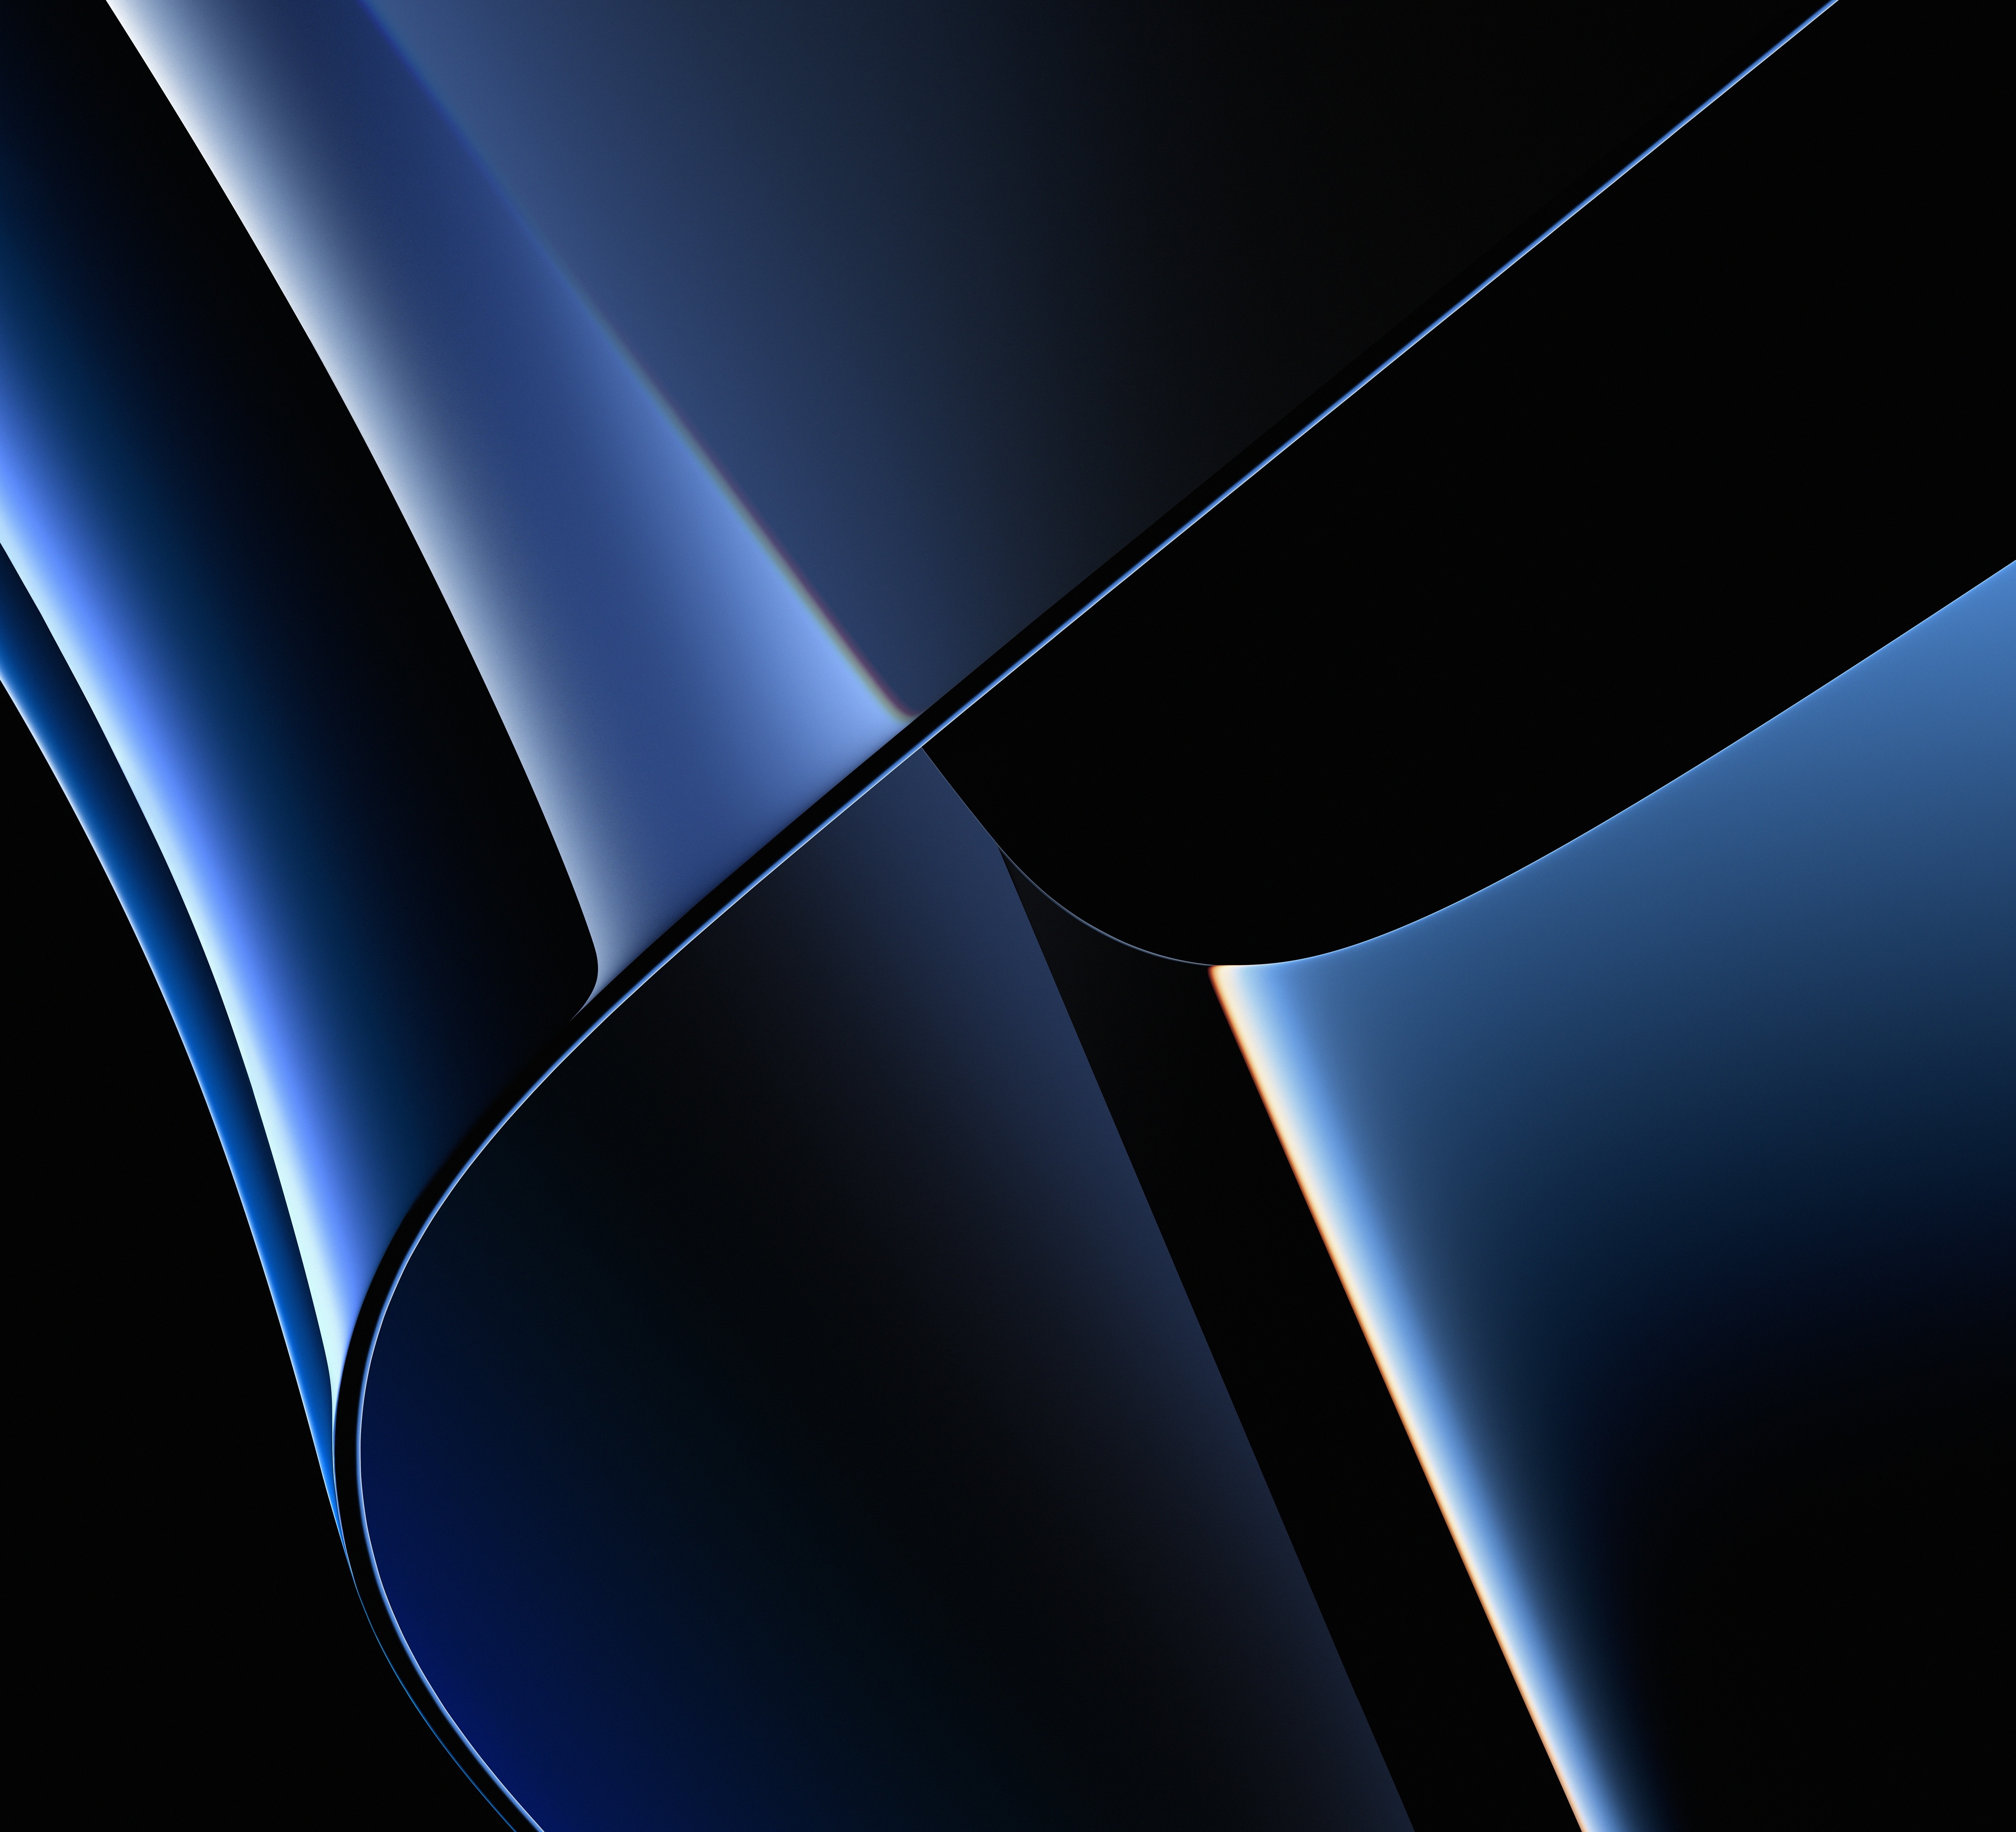 HD wallpaper, 5K, Black Background, 2021, Stock, Apple Macbook Pro, Dark Mode, Apple Event 2021, Blue